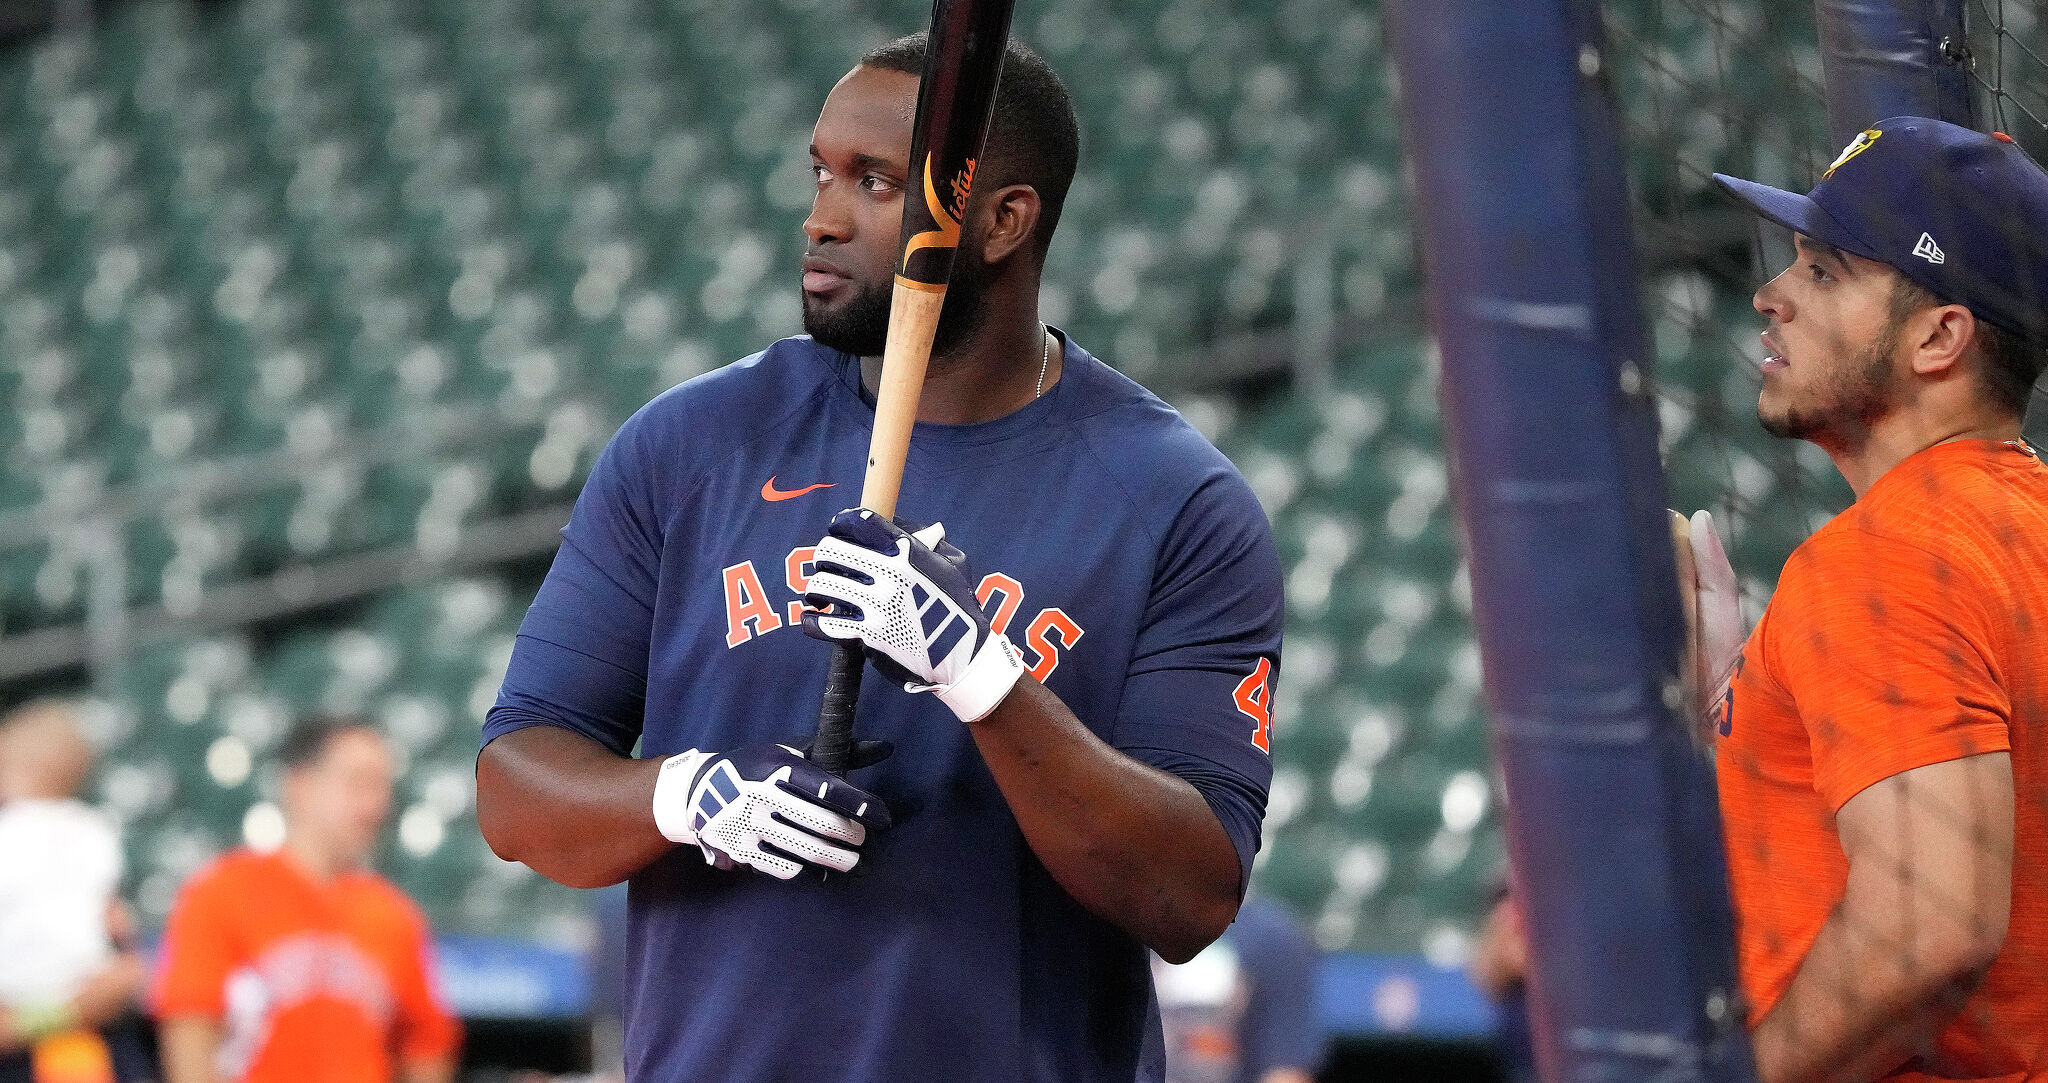 Houston Astros: Yordan Alvarez hopeful he can return soon